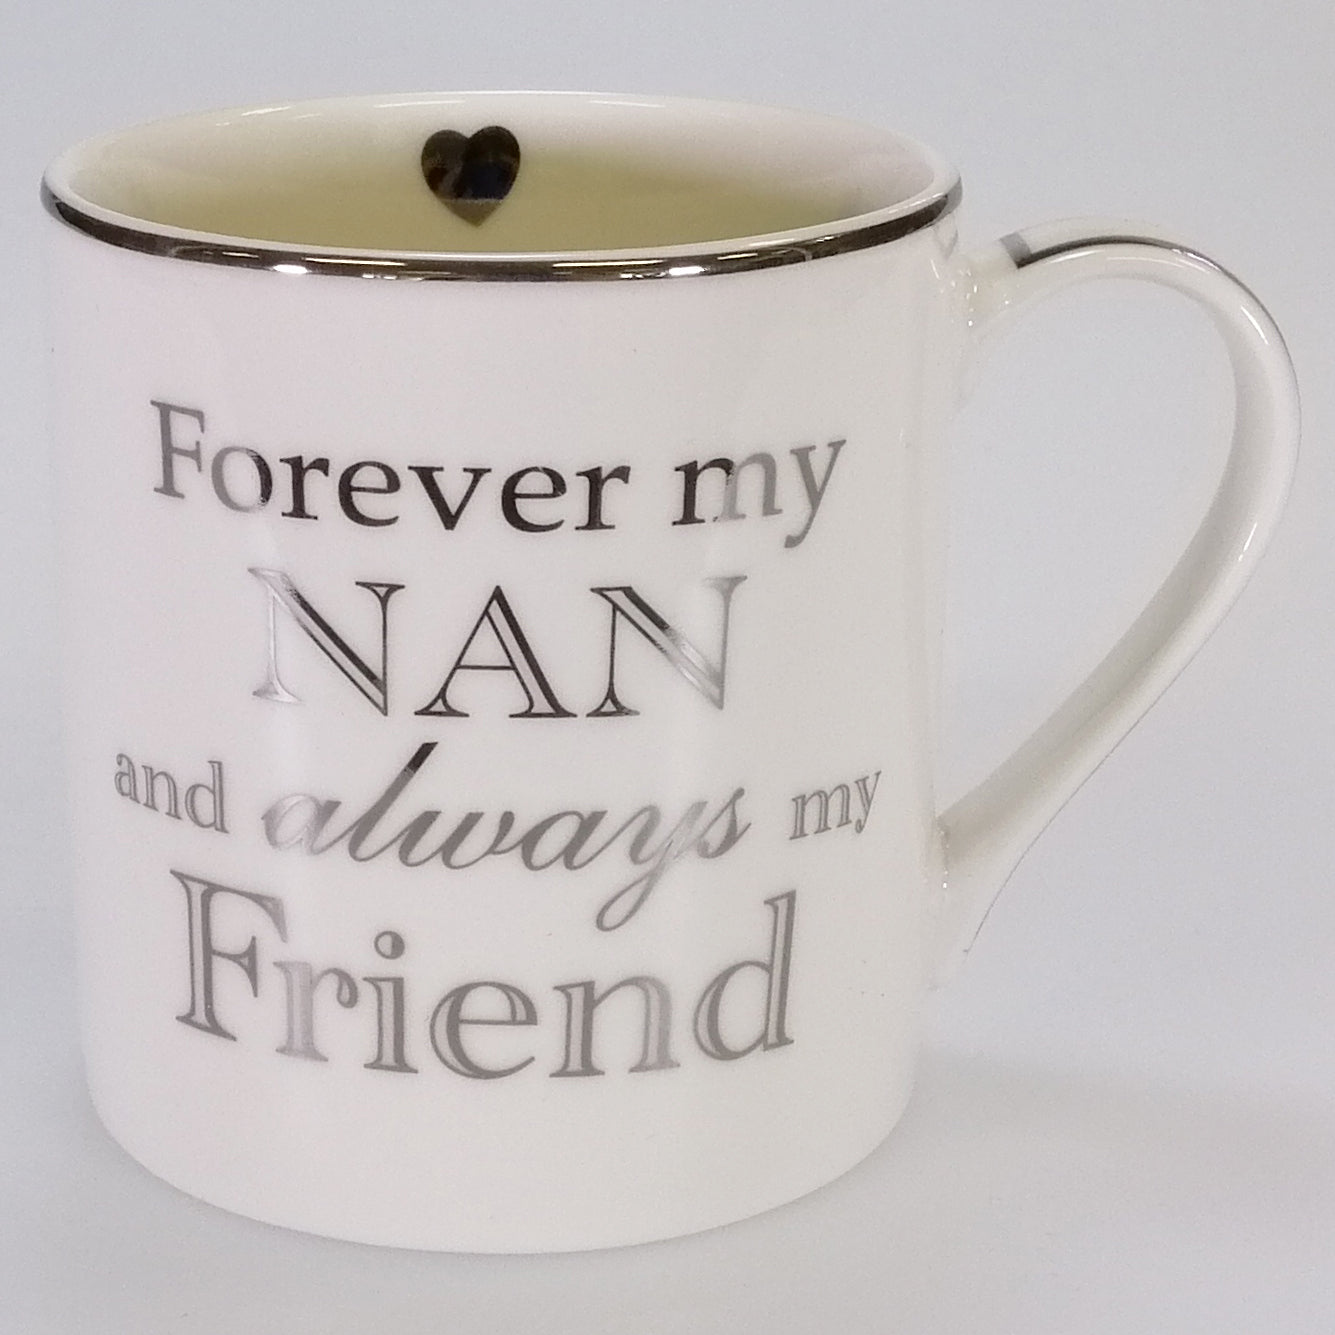 Fine China Mug - "Forever My Nan"